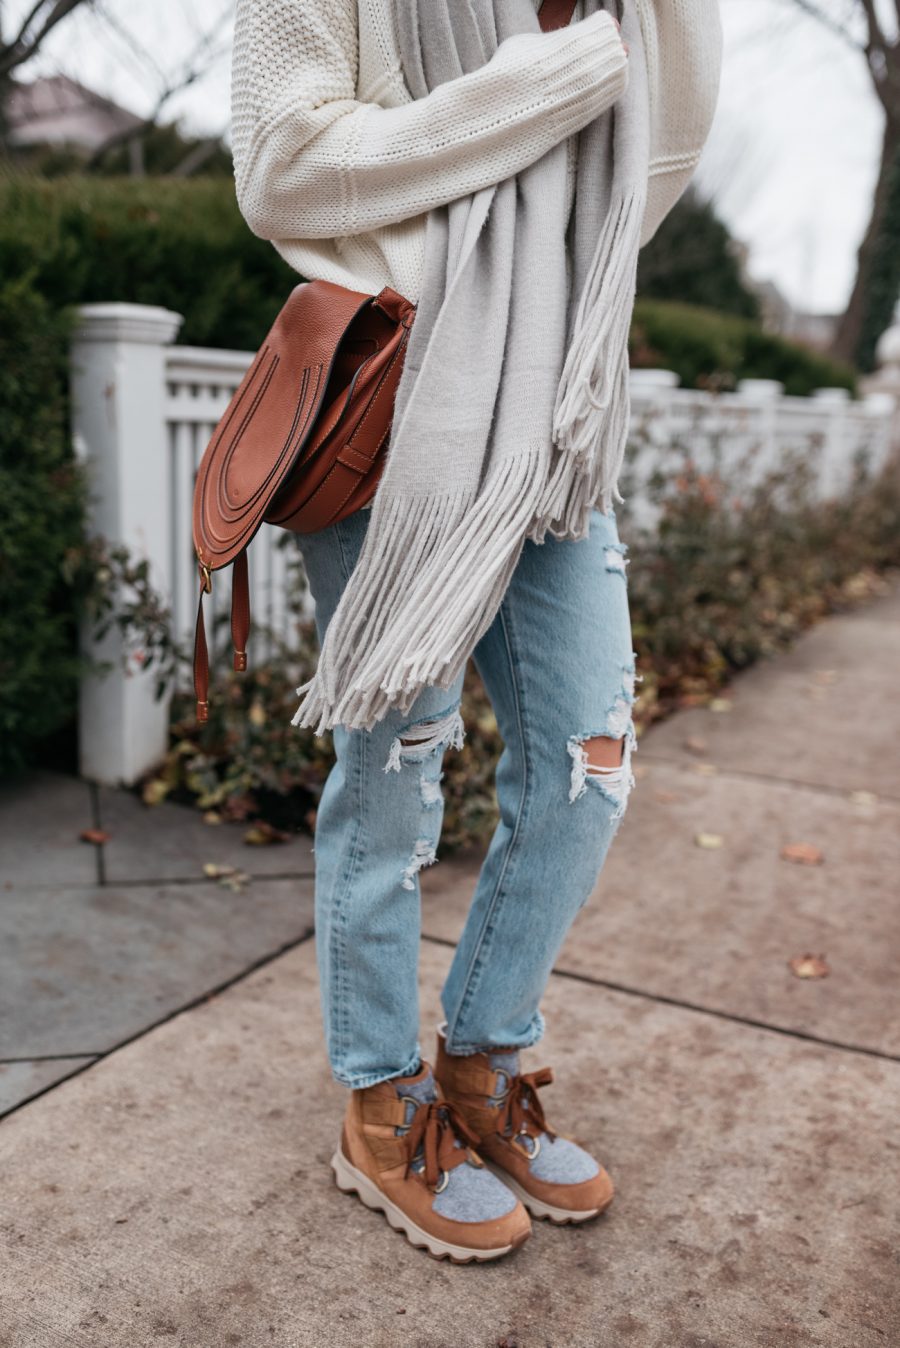 Sweater, cashmere scarf, denim, Sorel winter boots